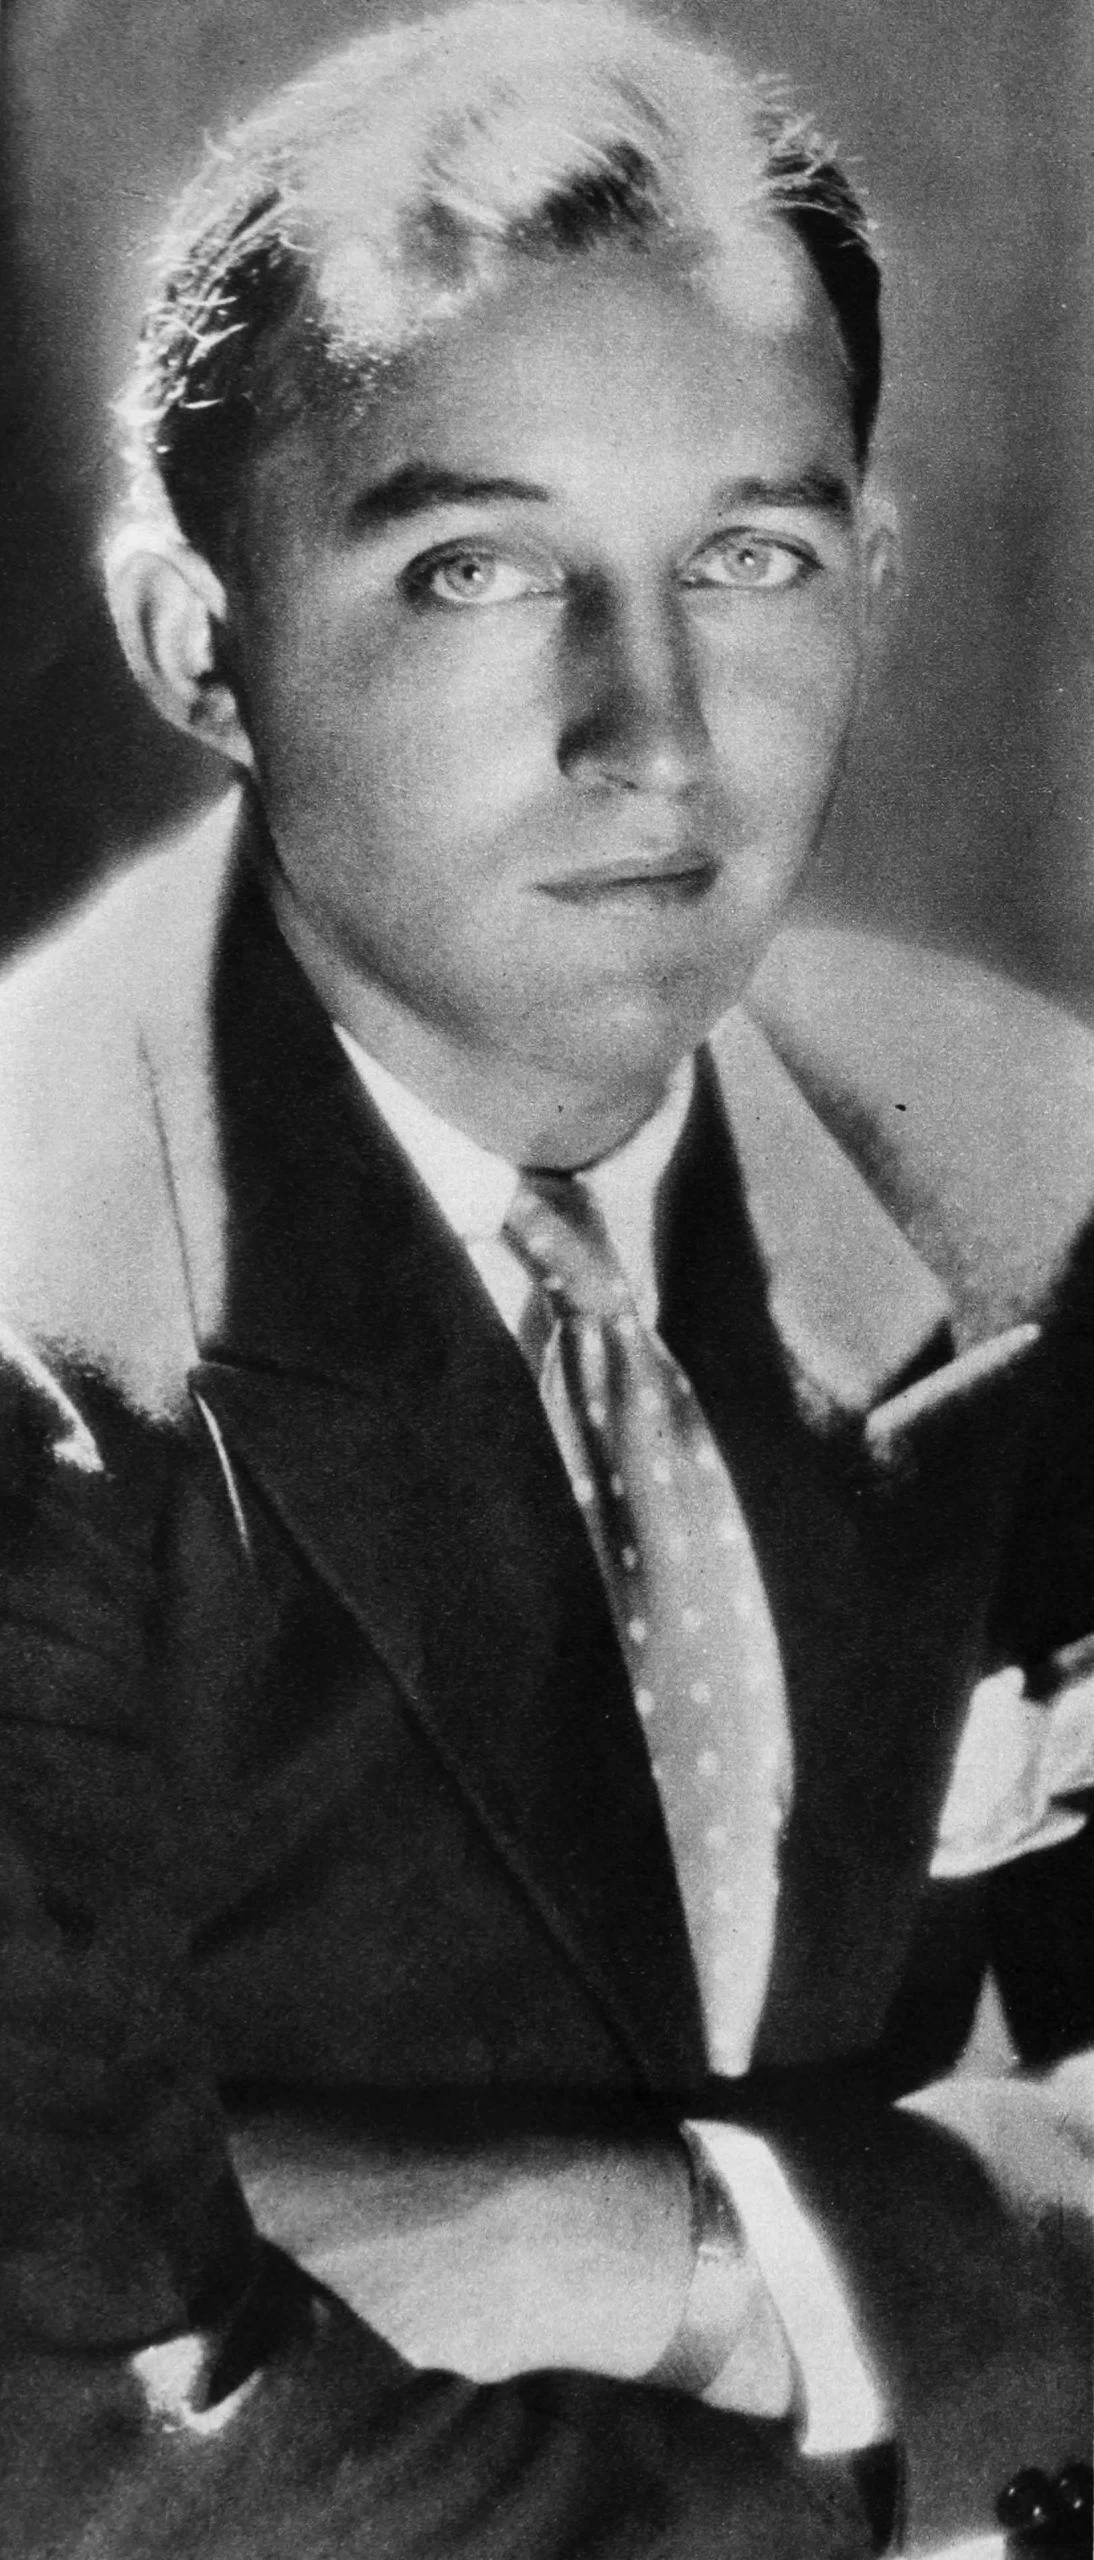 Bing Crosby in Radio Digest (1931)